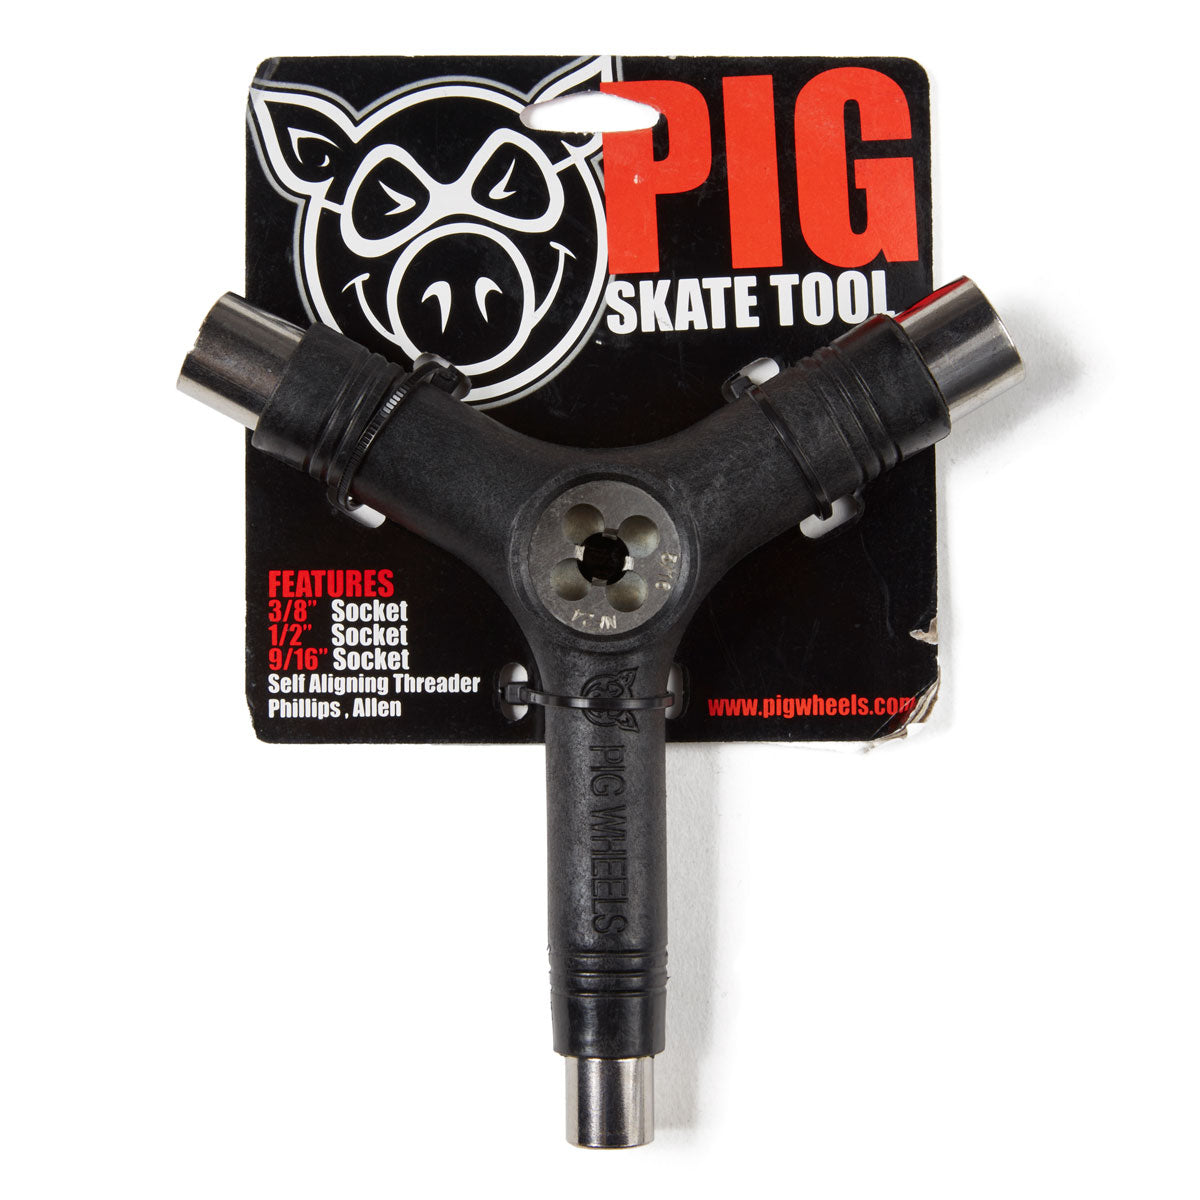 Pig Skate Tool